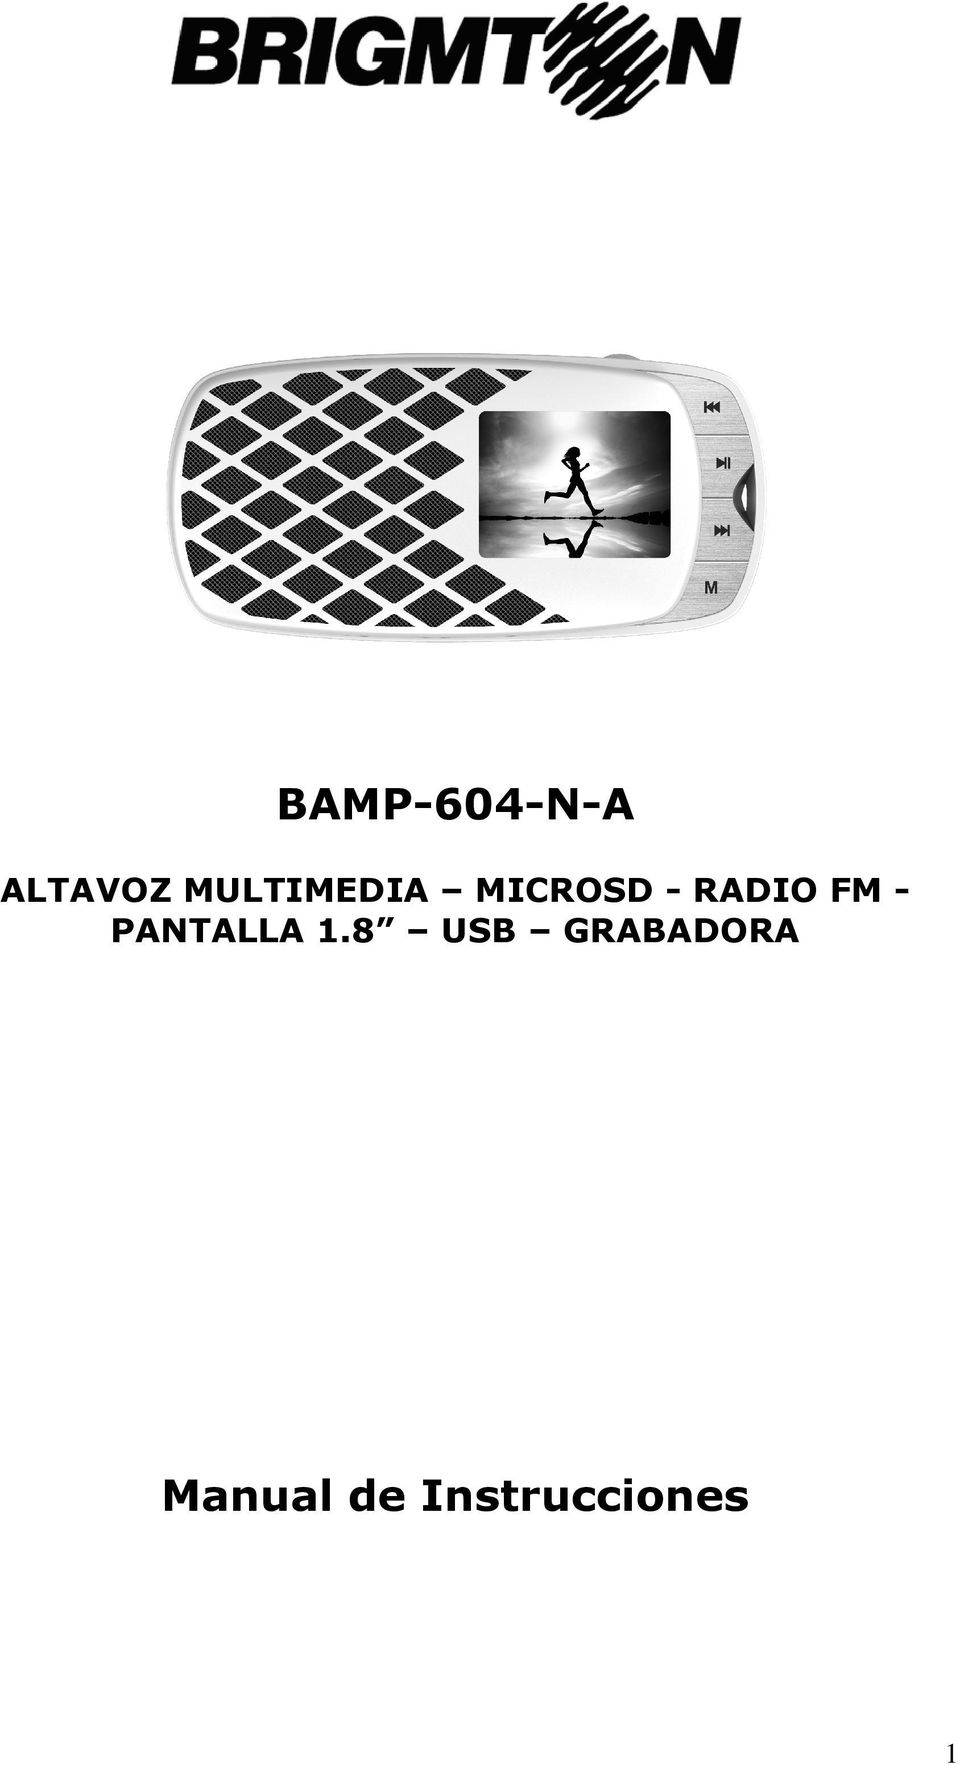 RADIO FM PANTALLA 1.